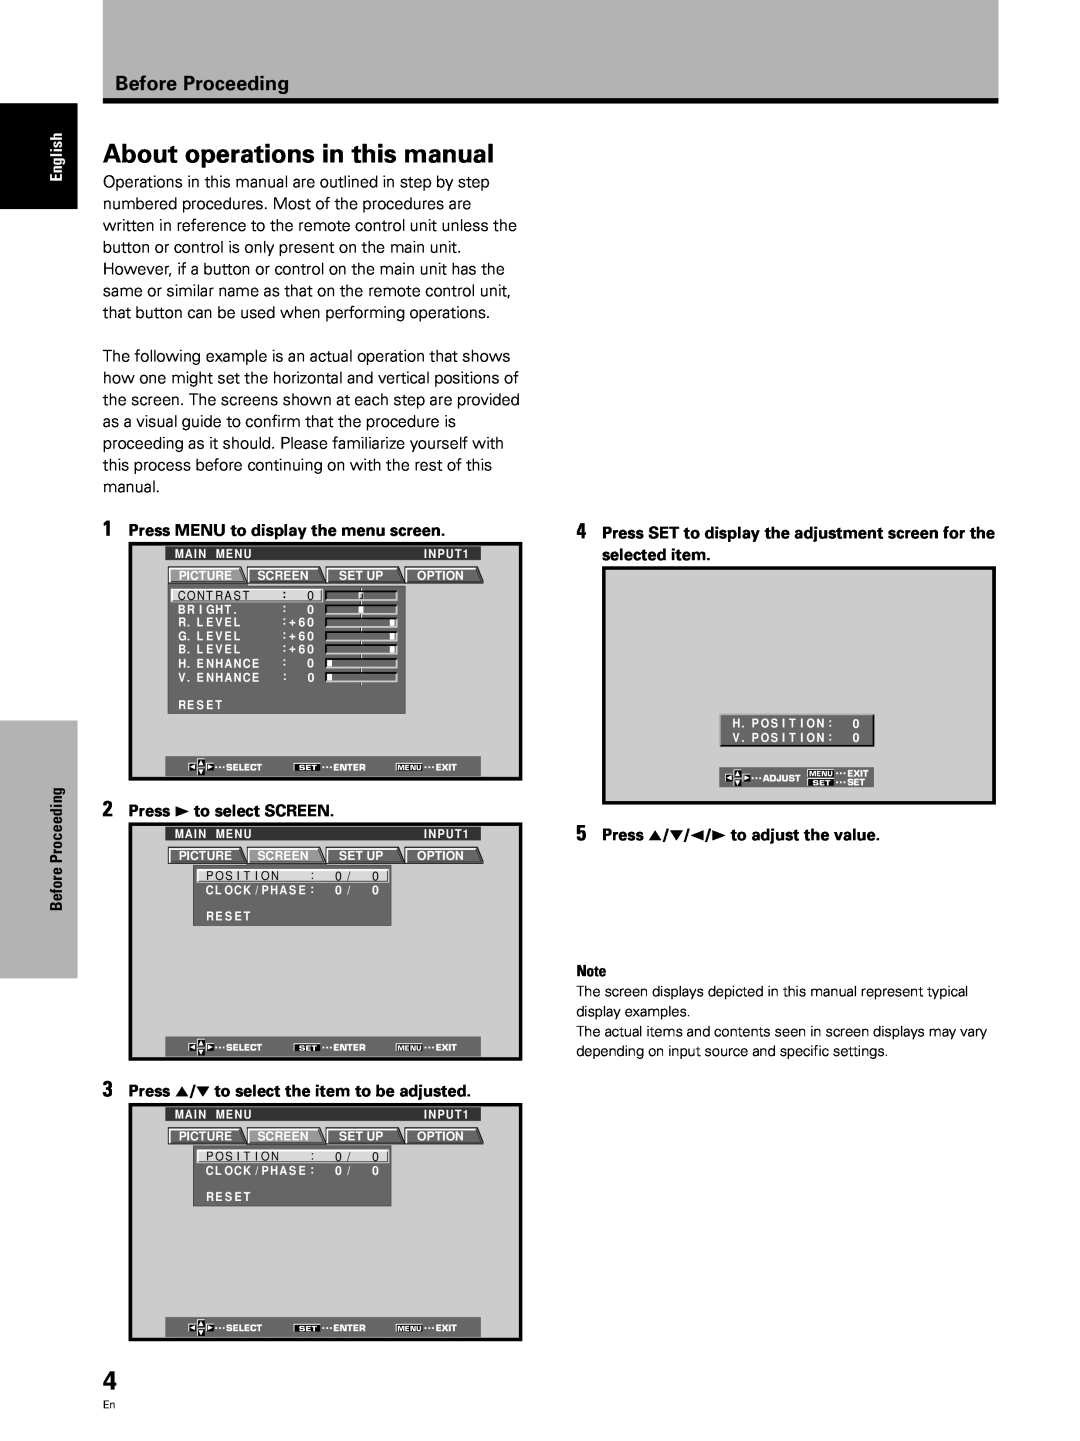 Pioneer PDP 503CMX, PDP 433CMX Before Proceeding, Press MENU to display the menu screen, Press 3 to select SCREEN 